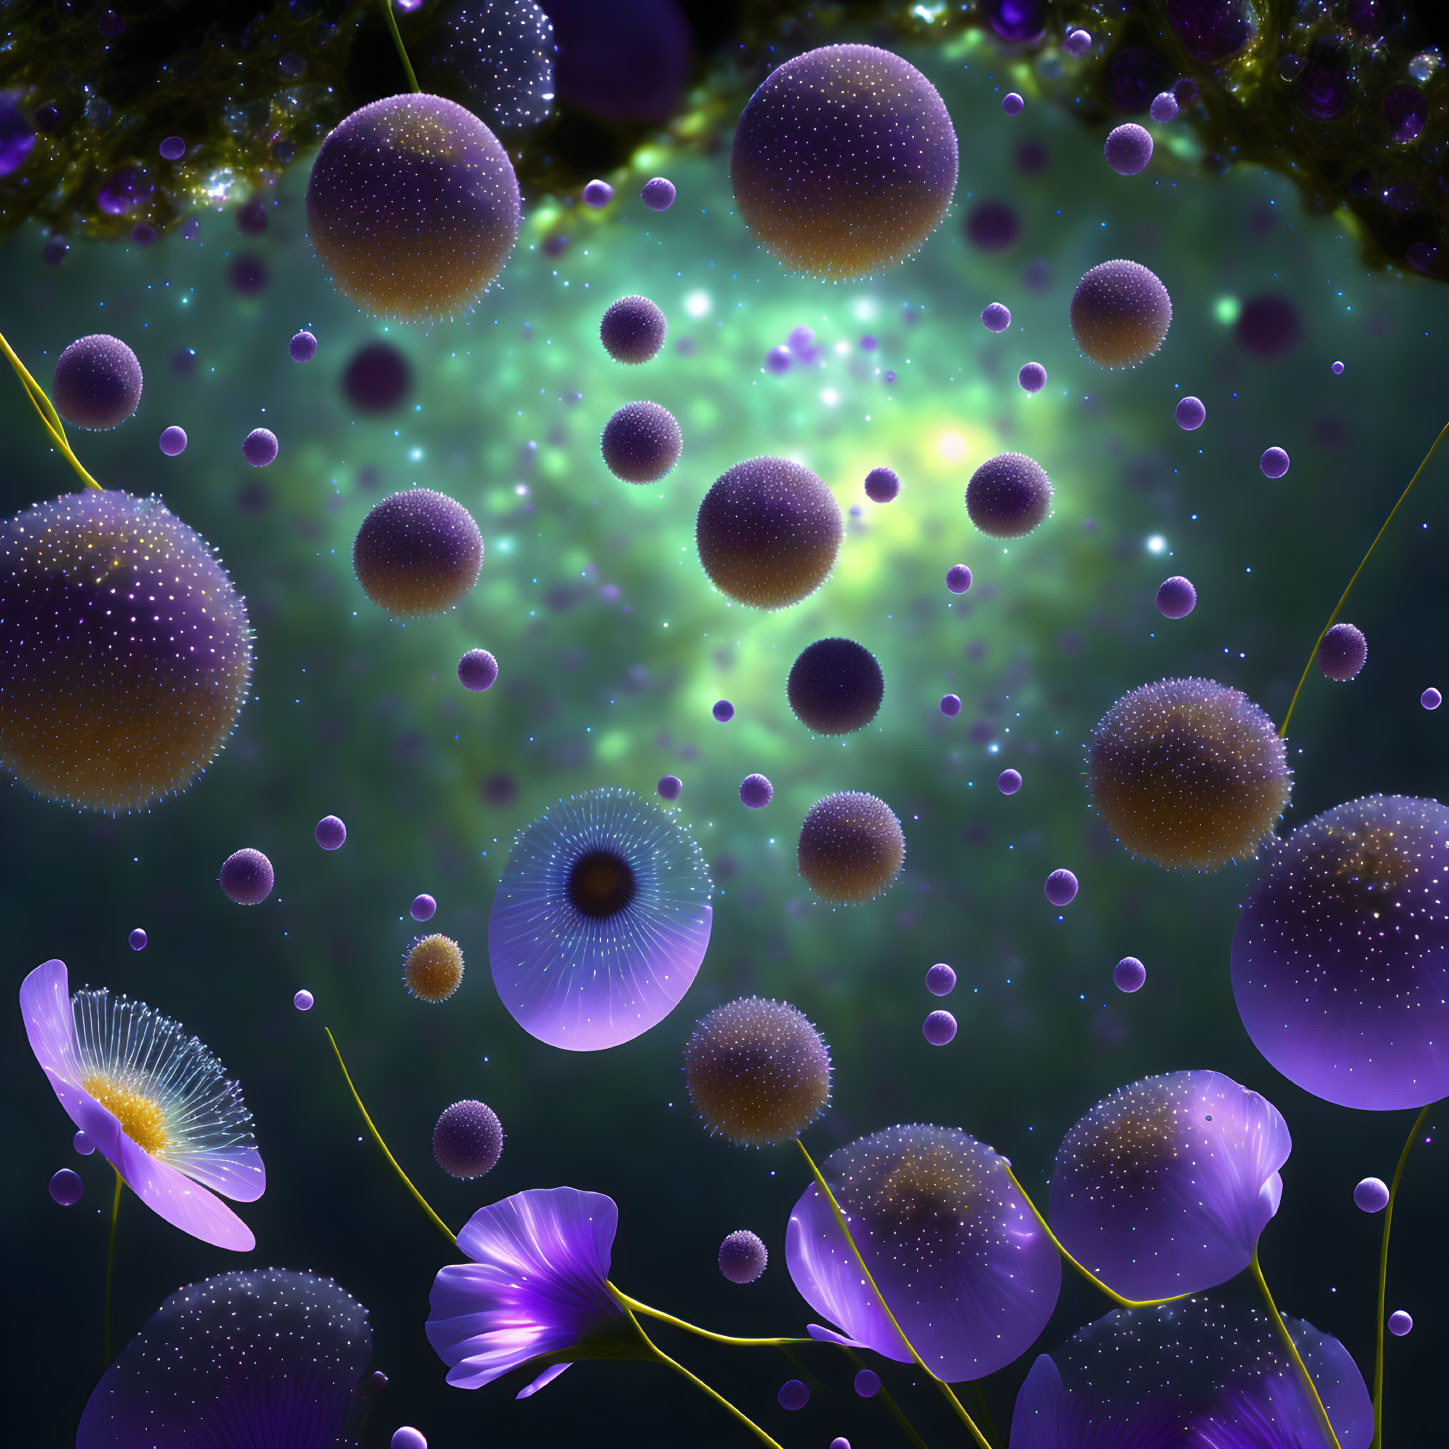 Fantastical 3D Rendering of Floating Purple Spheres and Ethereal Flowers